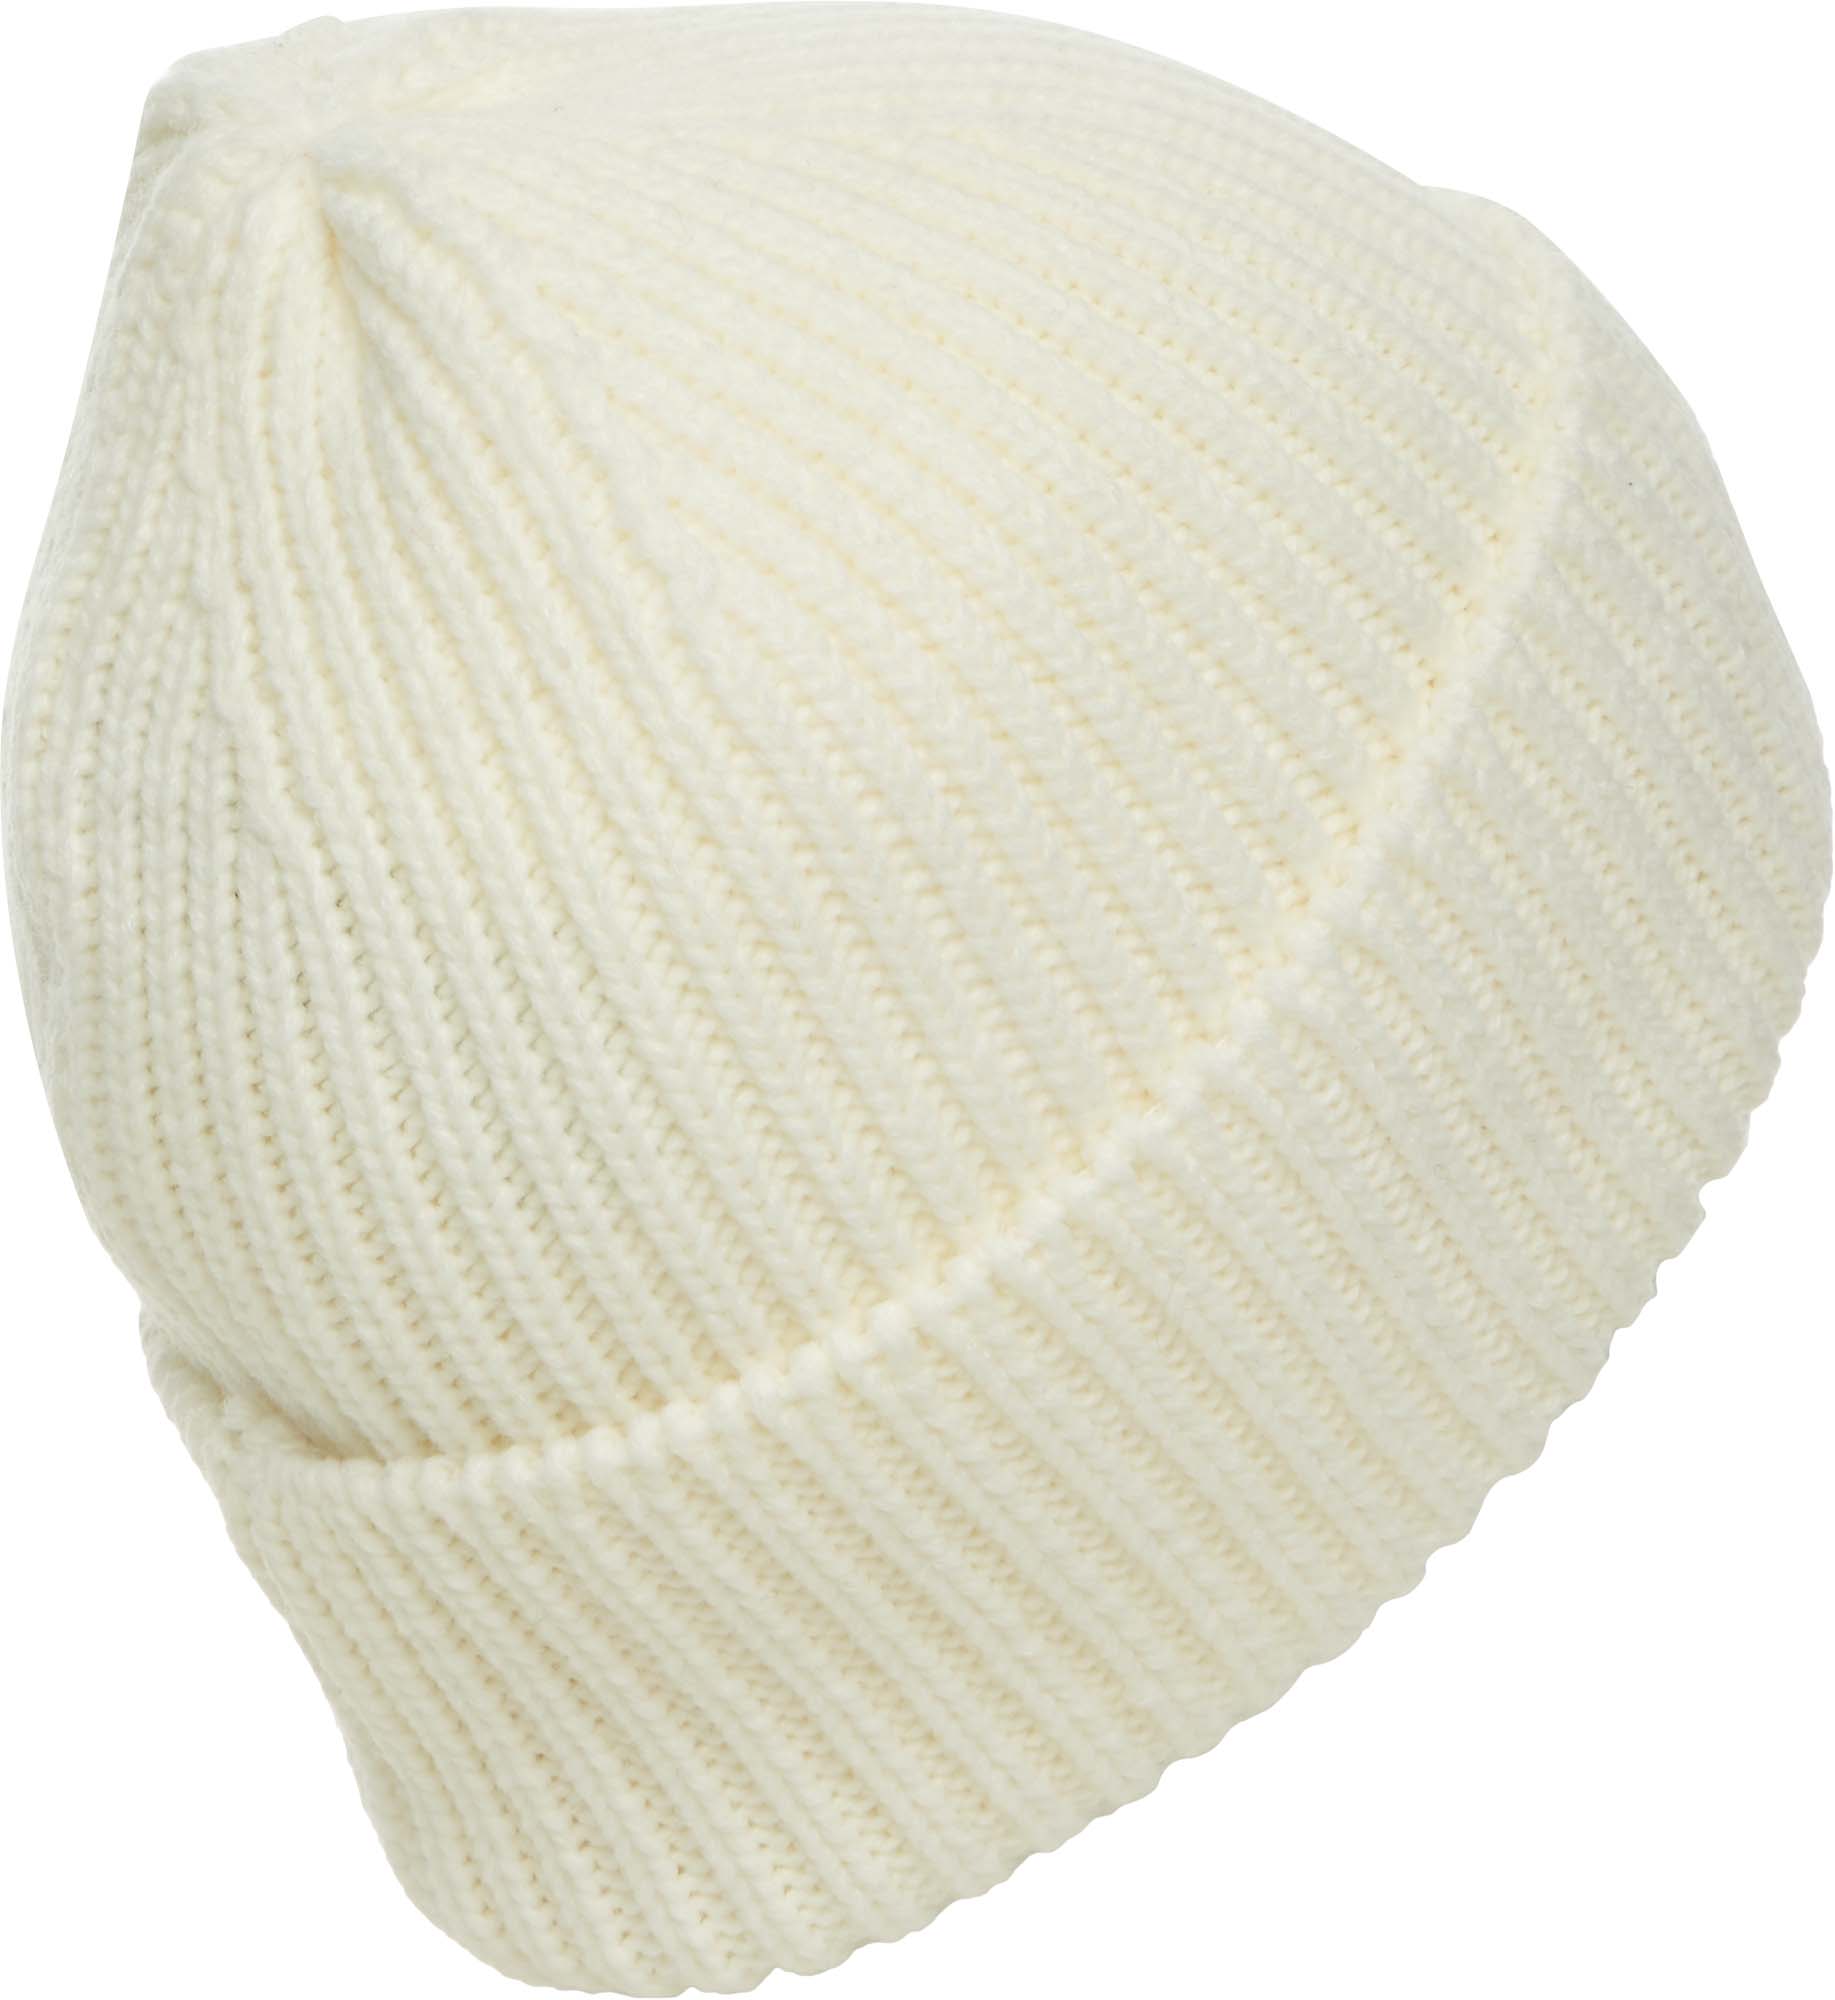 Women’s winter knitted hat